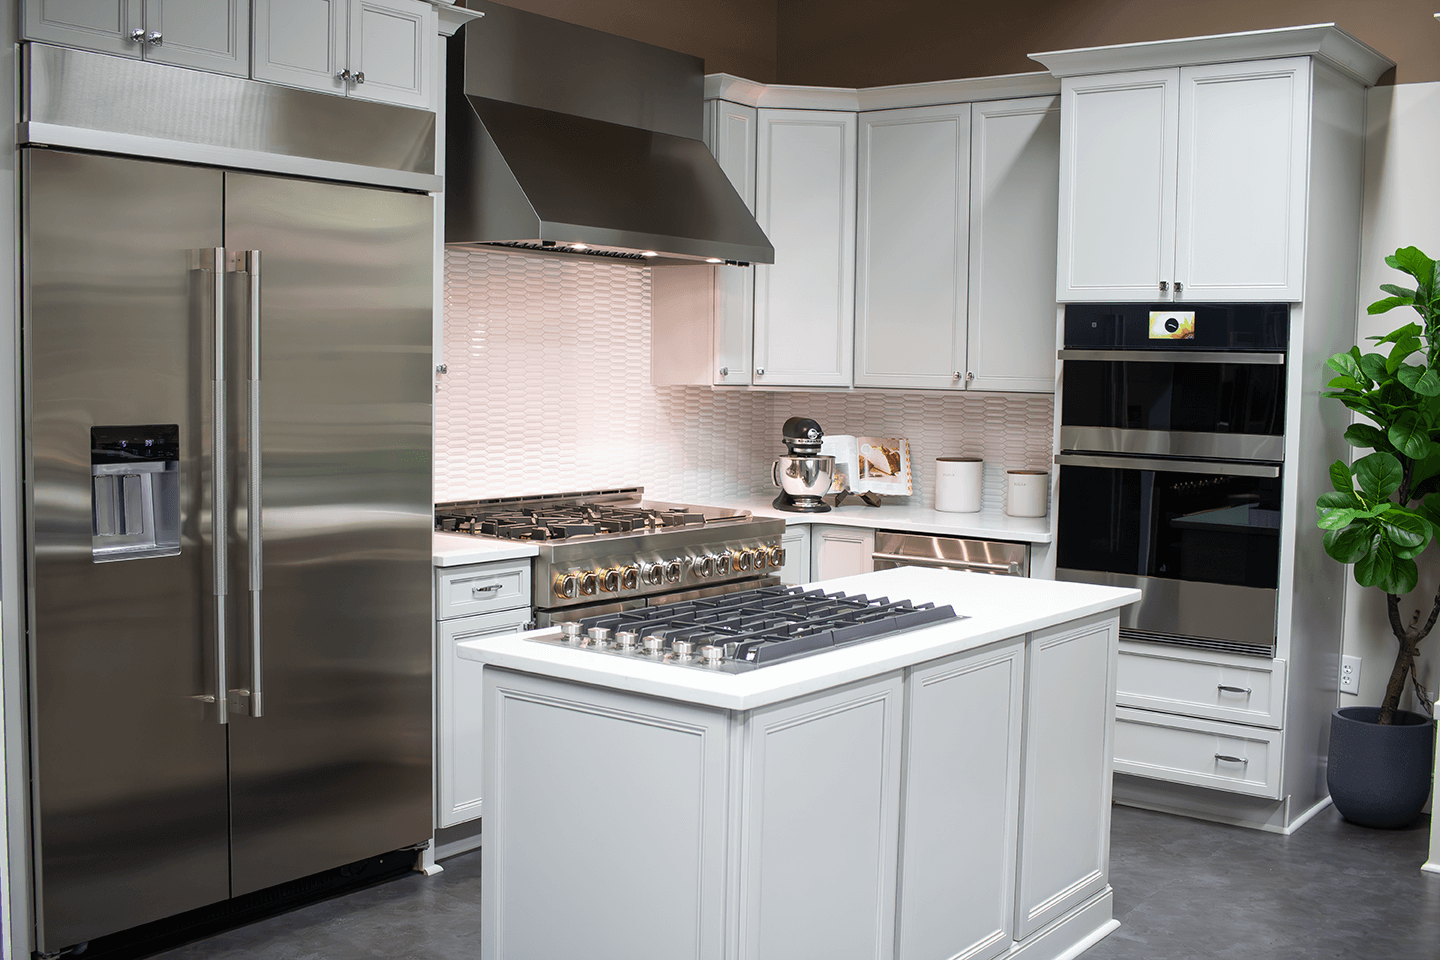 Designer Showroom Full Kitchen with Fridge, Oven, Range, Dishwasher, and Wall Ovens